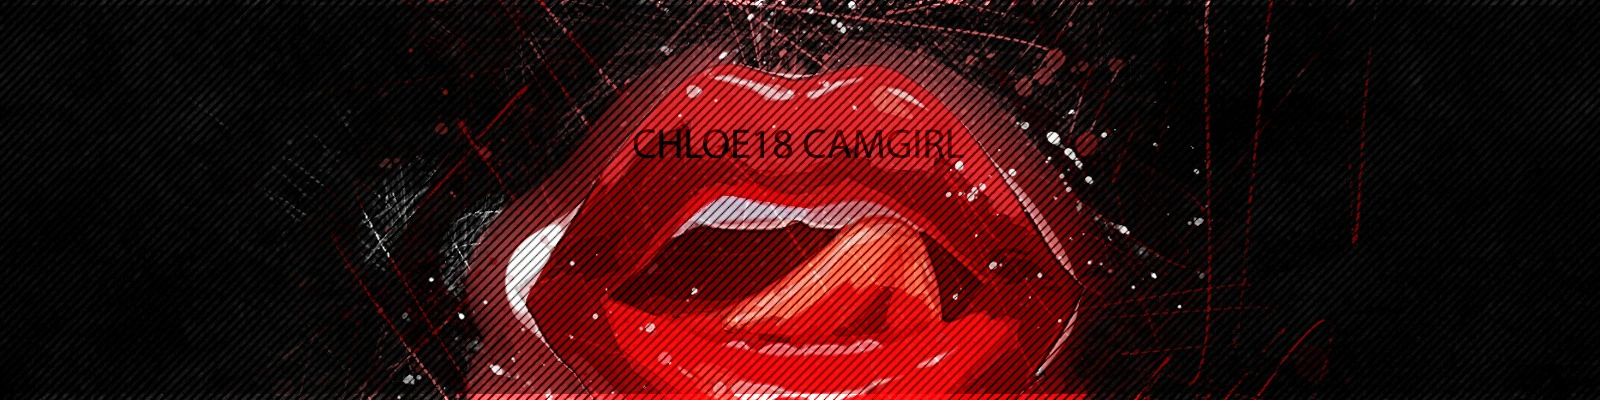 Chloe18 CamGirl main image